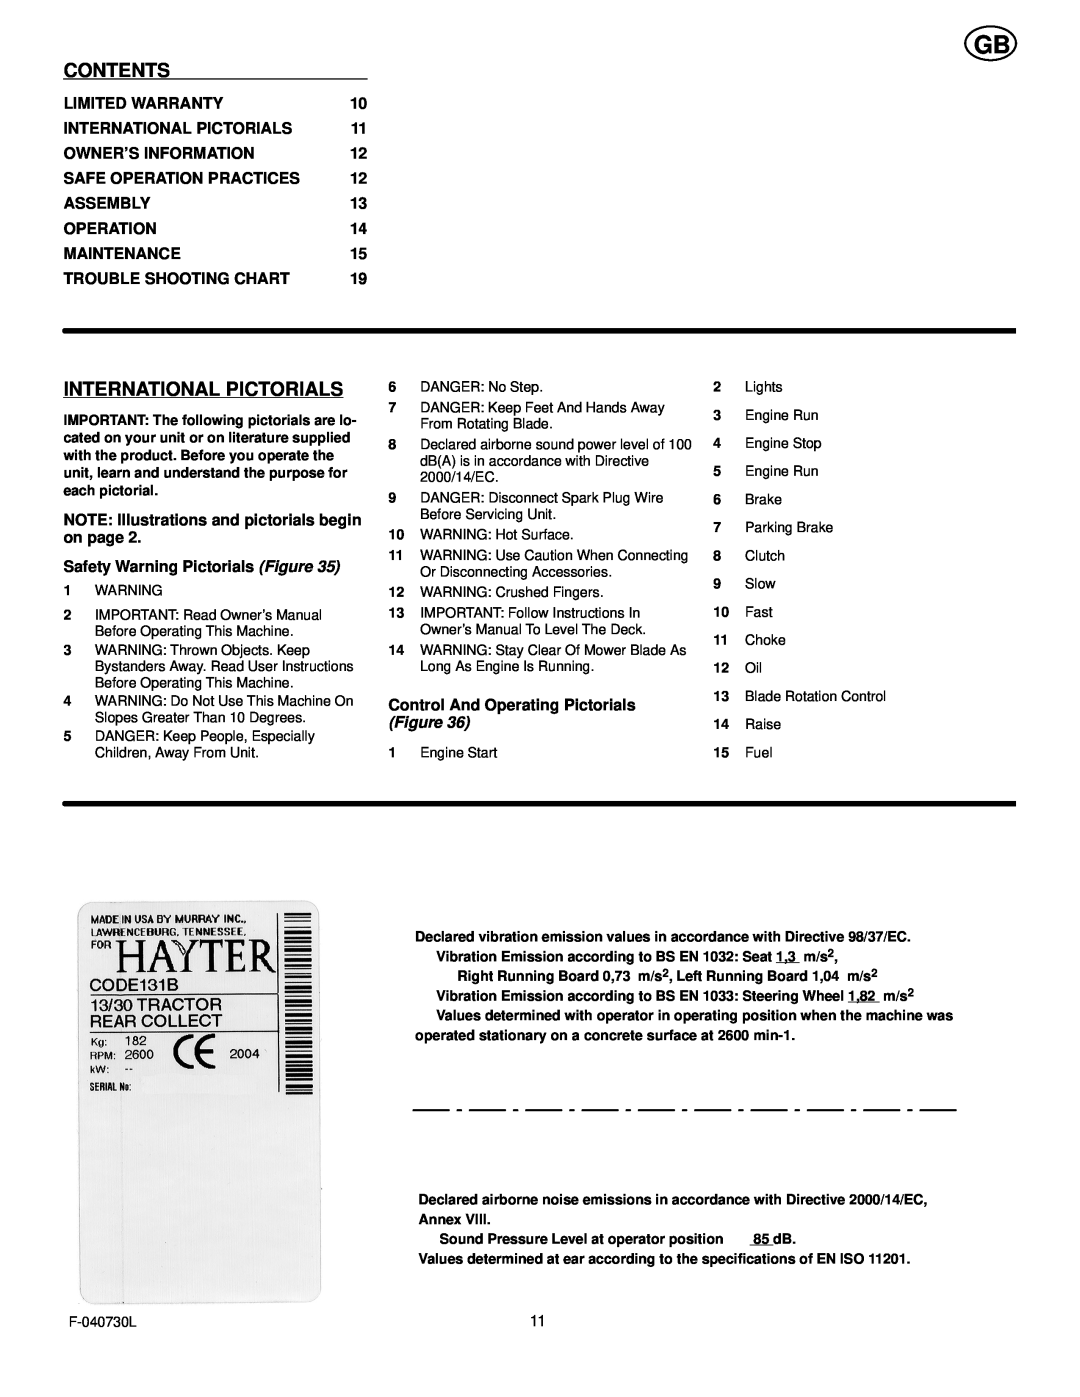 Hayter Mowers E131B manual Contents, International Pictorials 